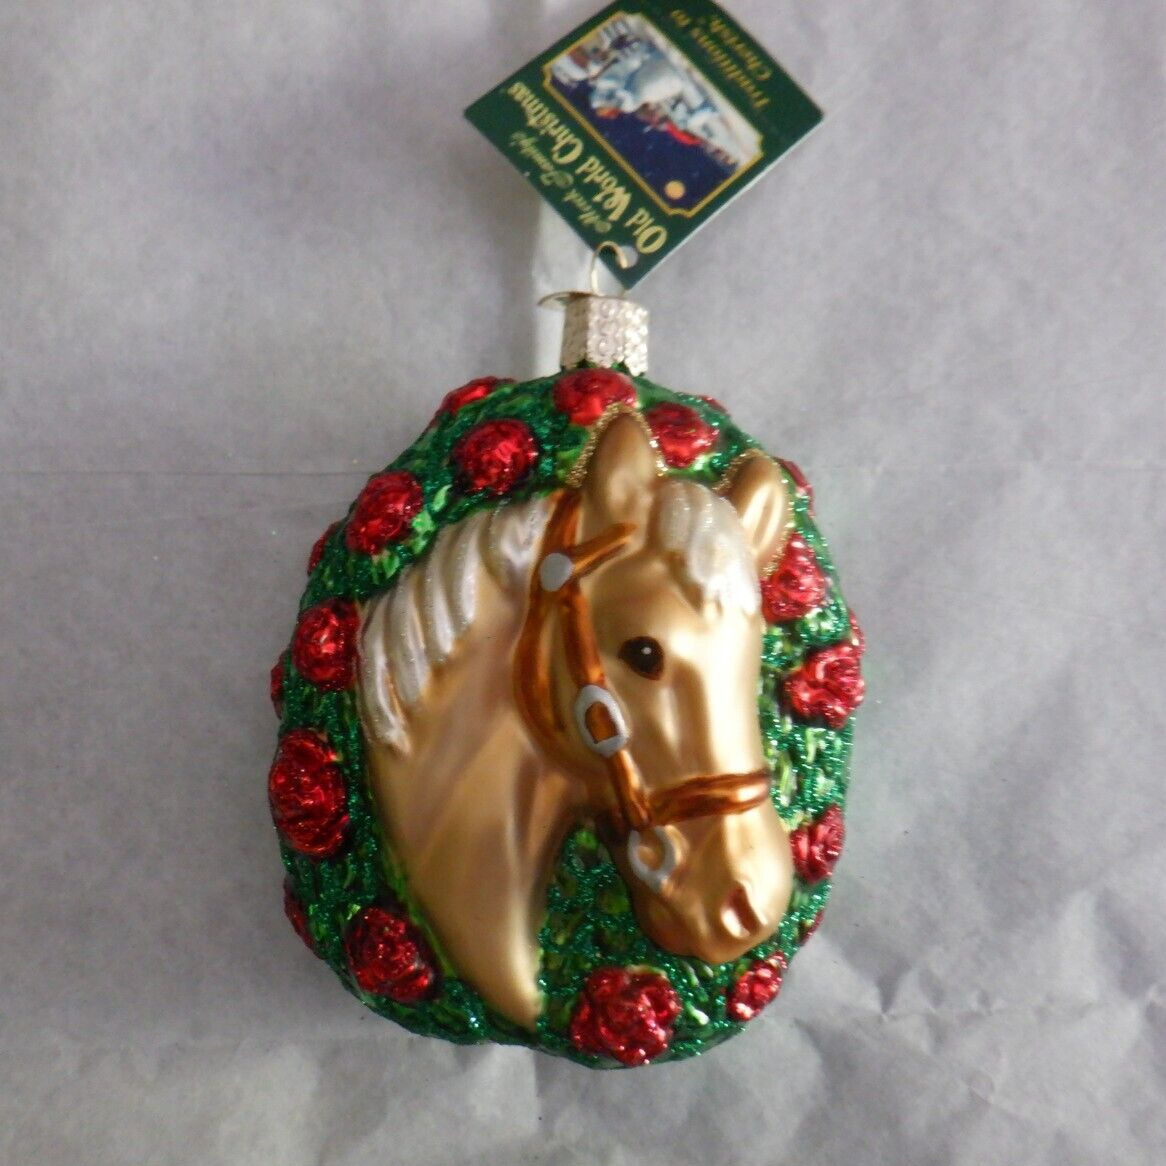 Merck Family Old World Christmas Blown Glass Ornament 2004 Champion